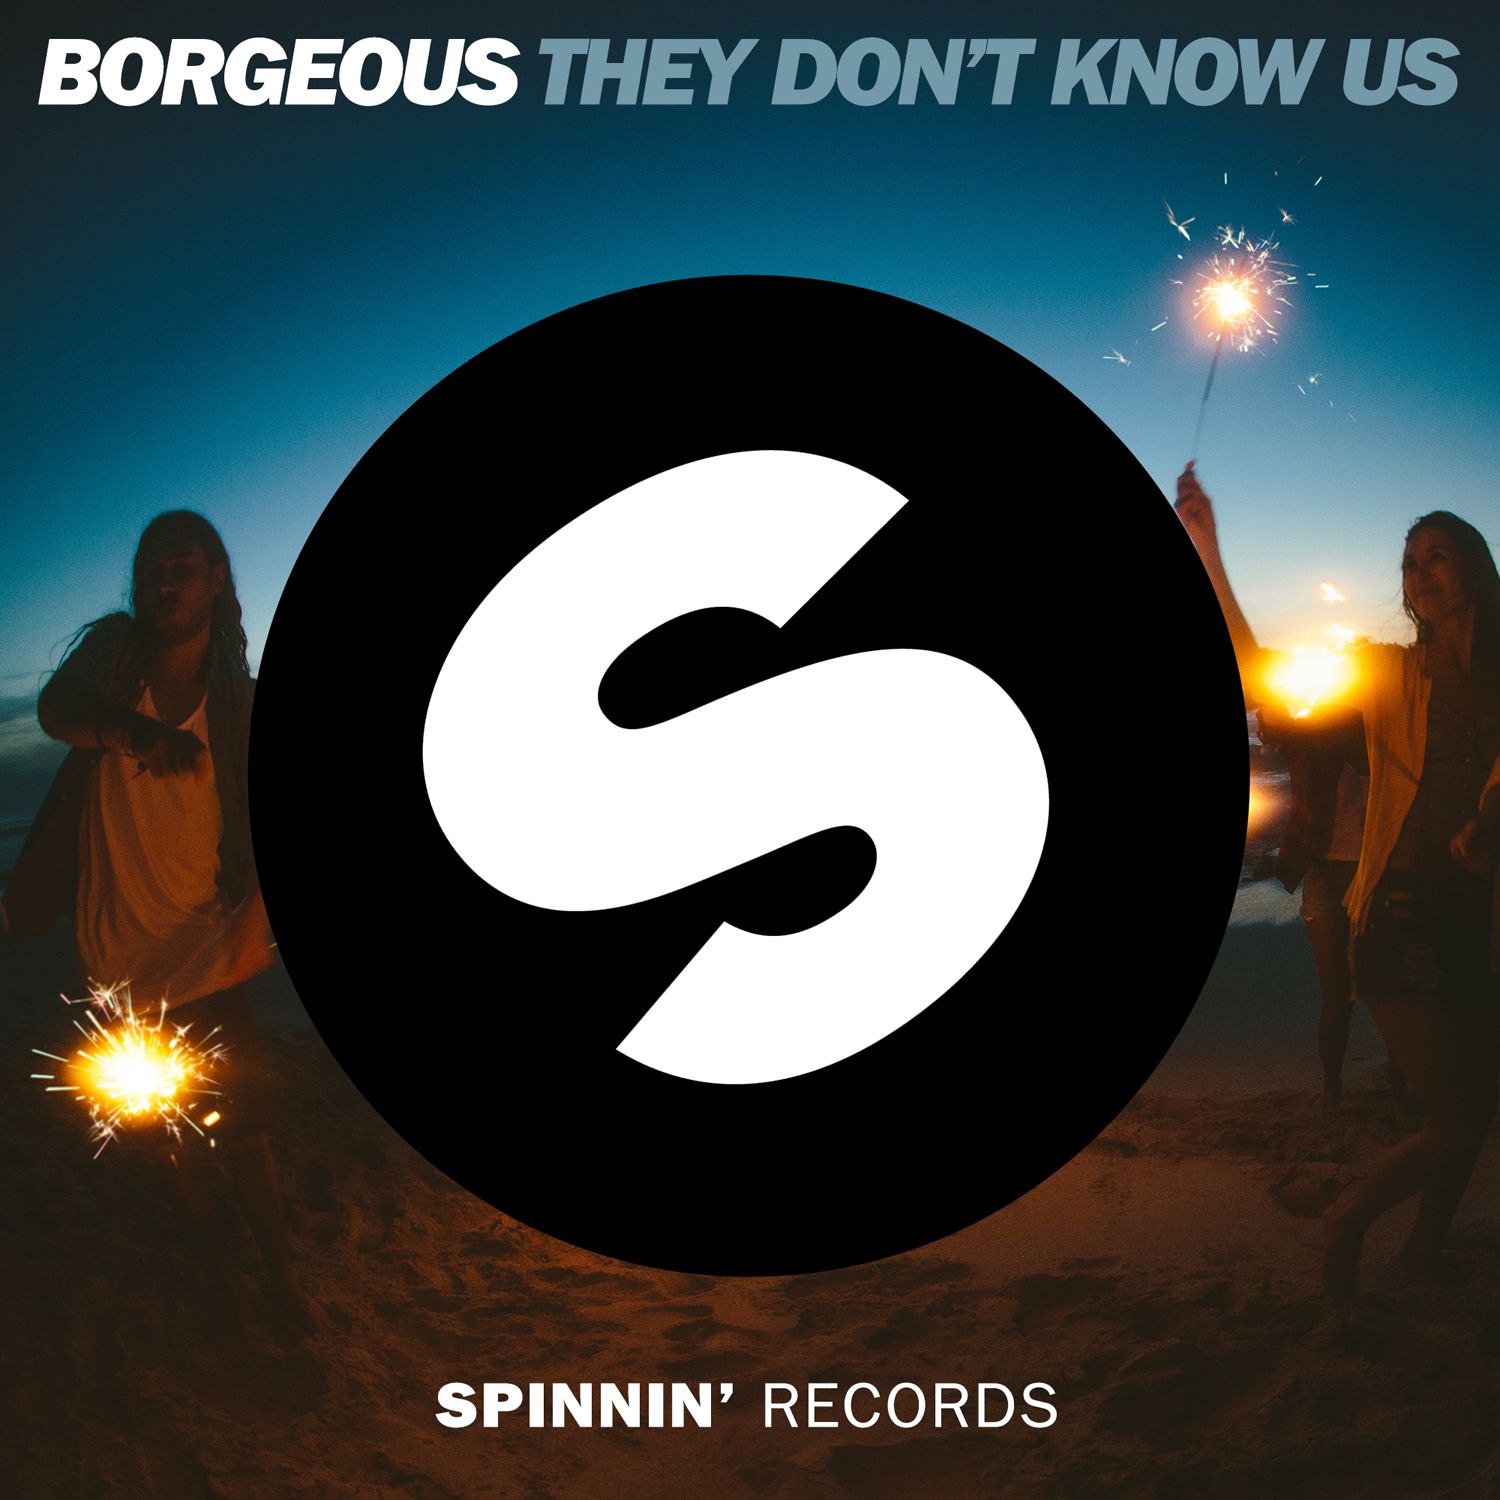 They Don't Know Us (Radio Edit)